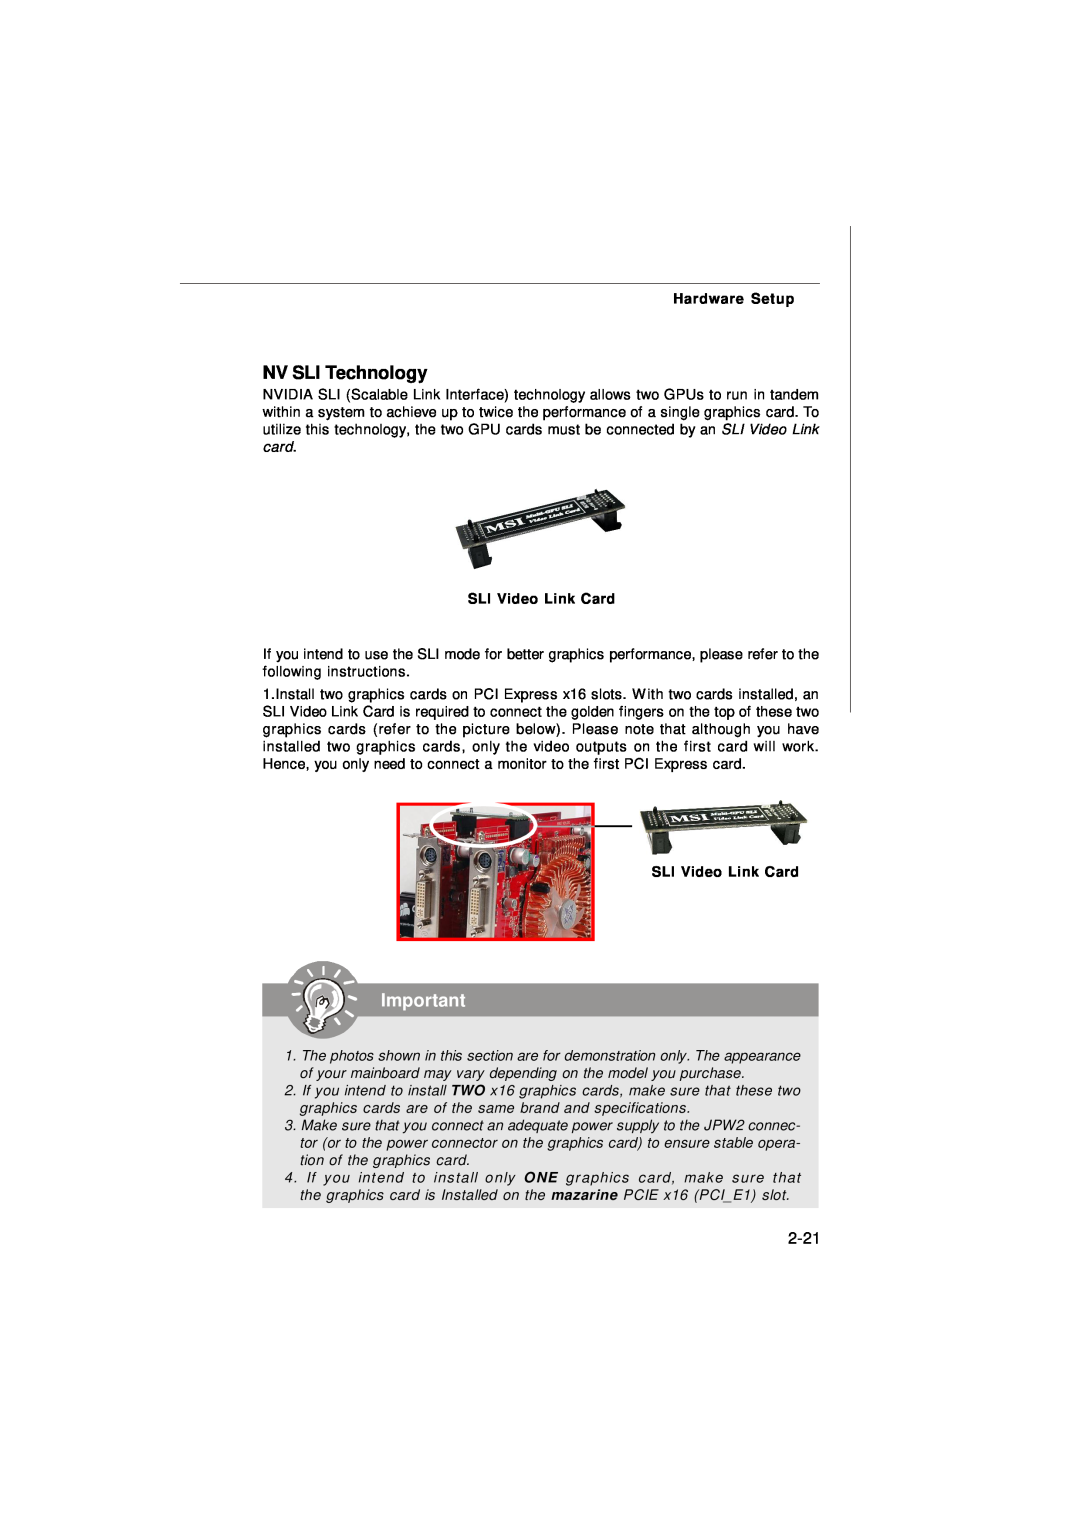 Nvidia MS-7374 manual NV SLI Technology, 2-21, SLI Video Link Card, Hardware Setup 